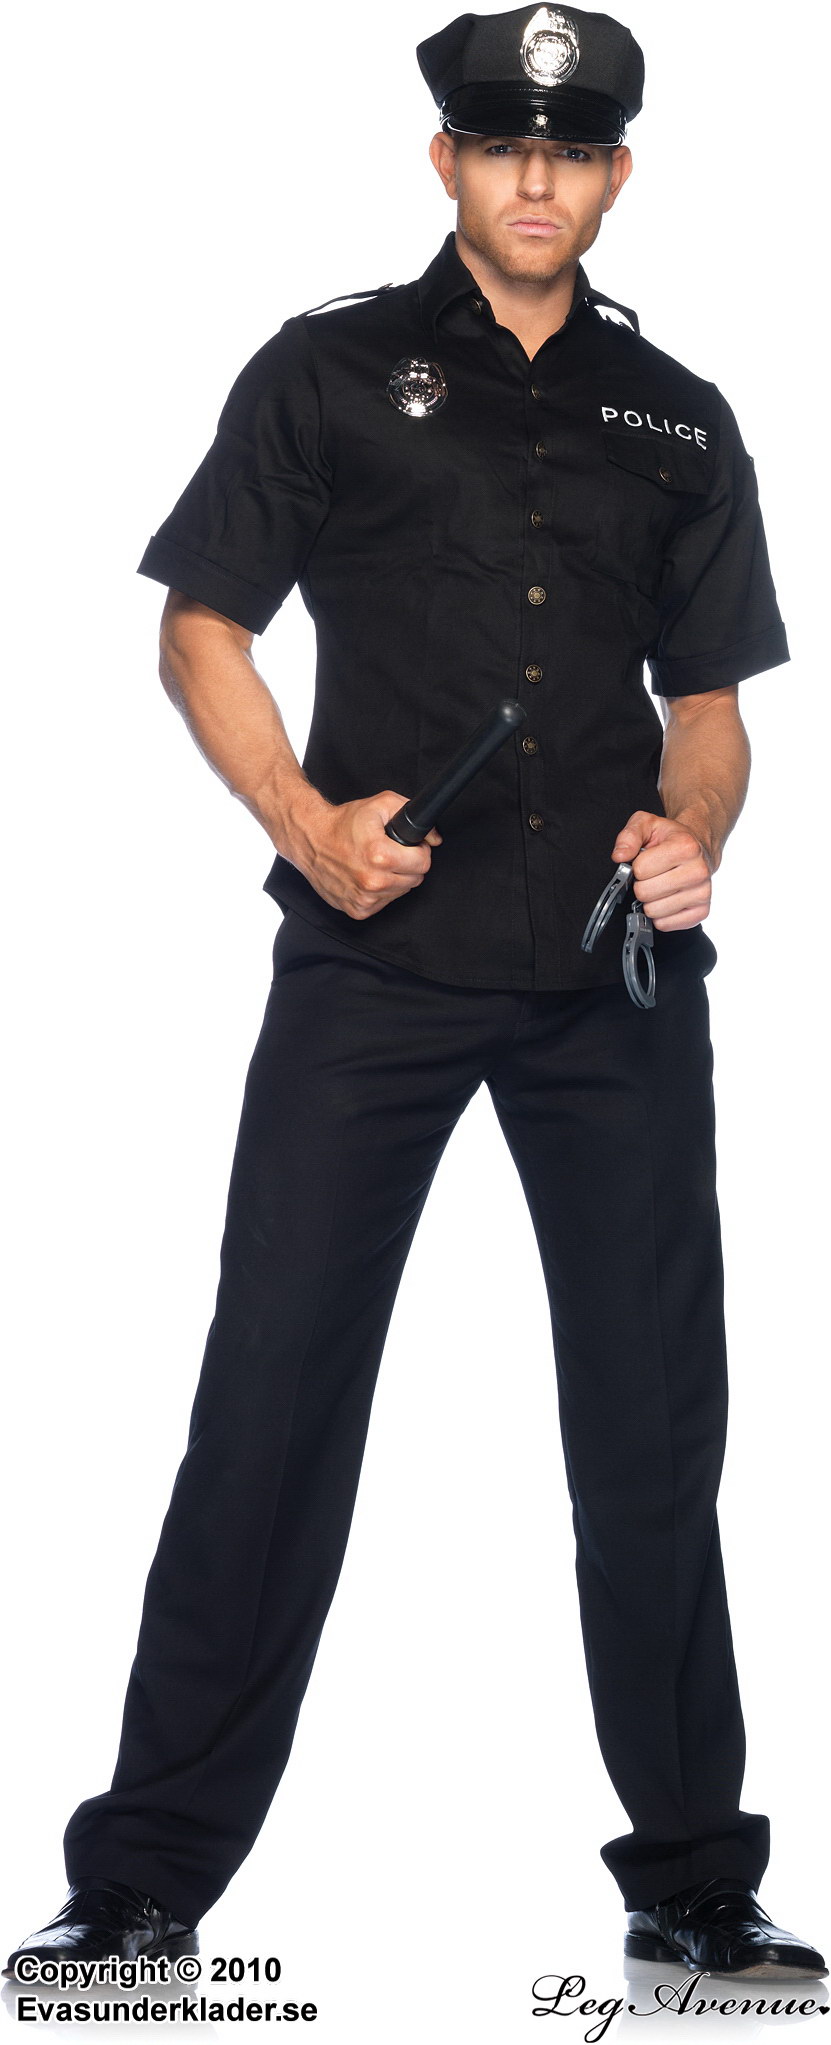 Police officer, costume set, short sleeves, buttons, pocket